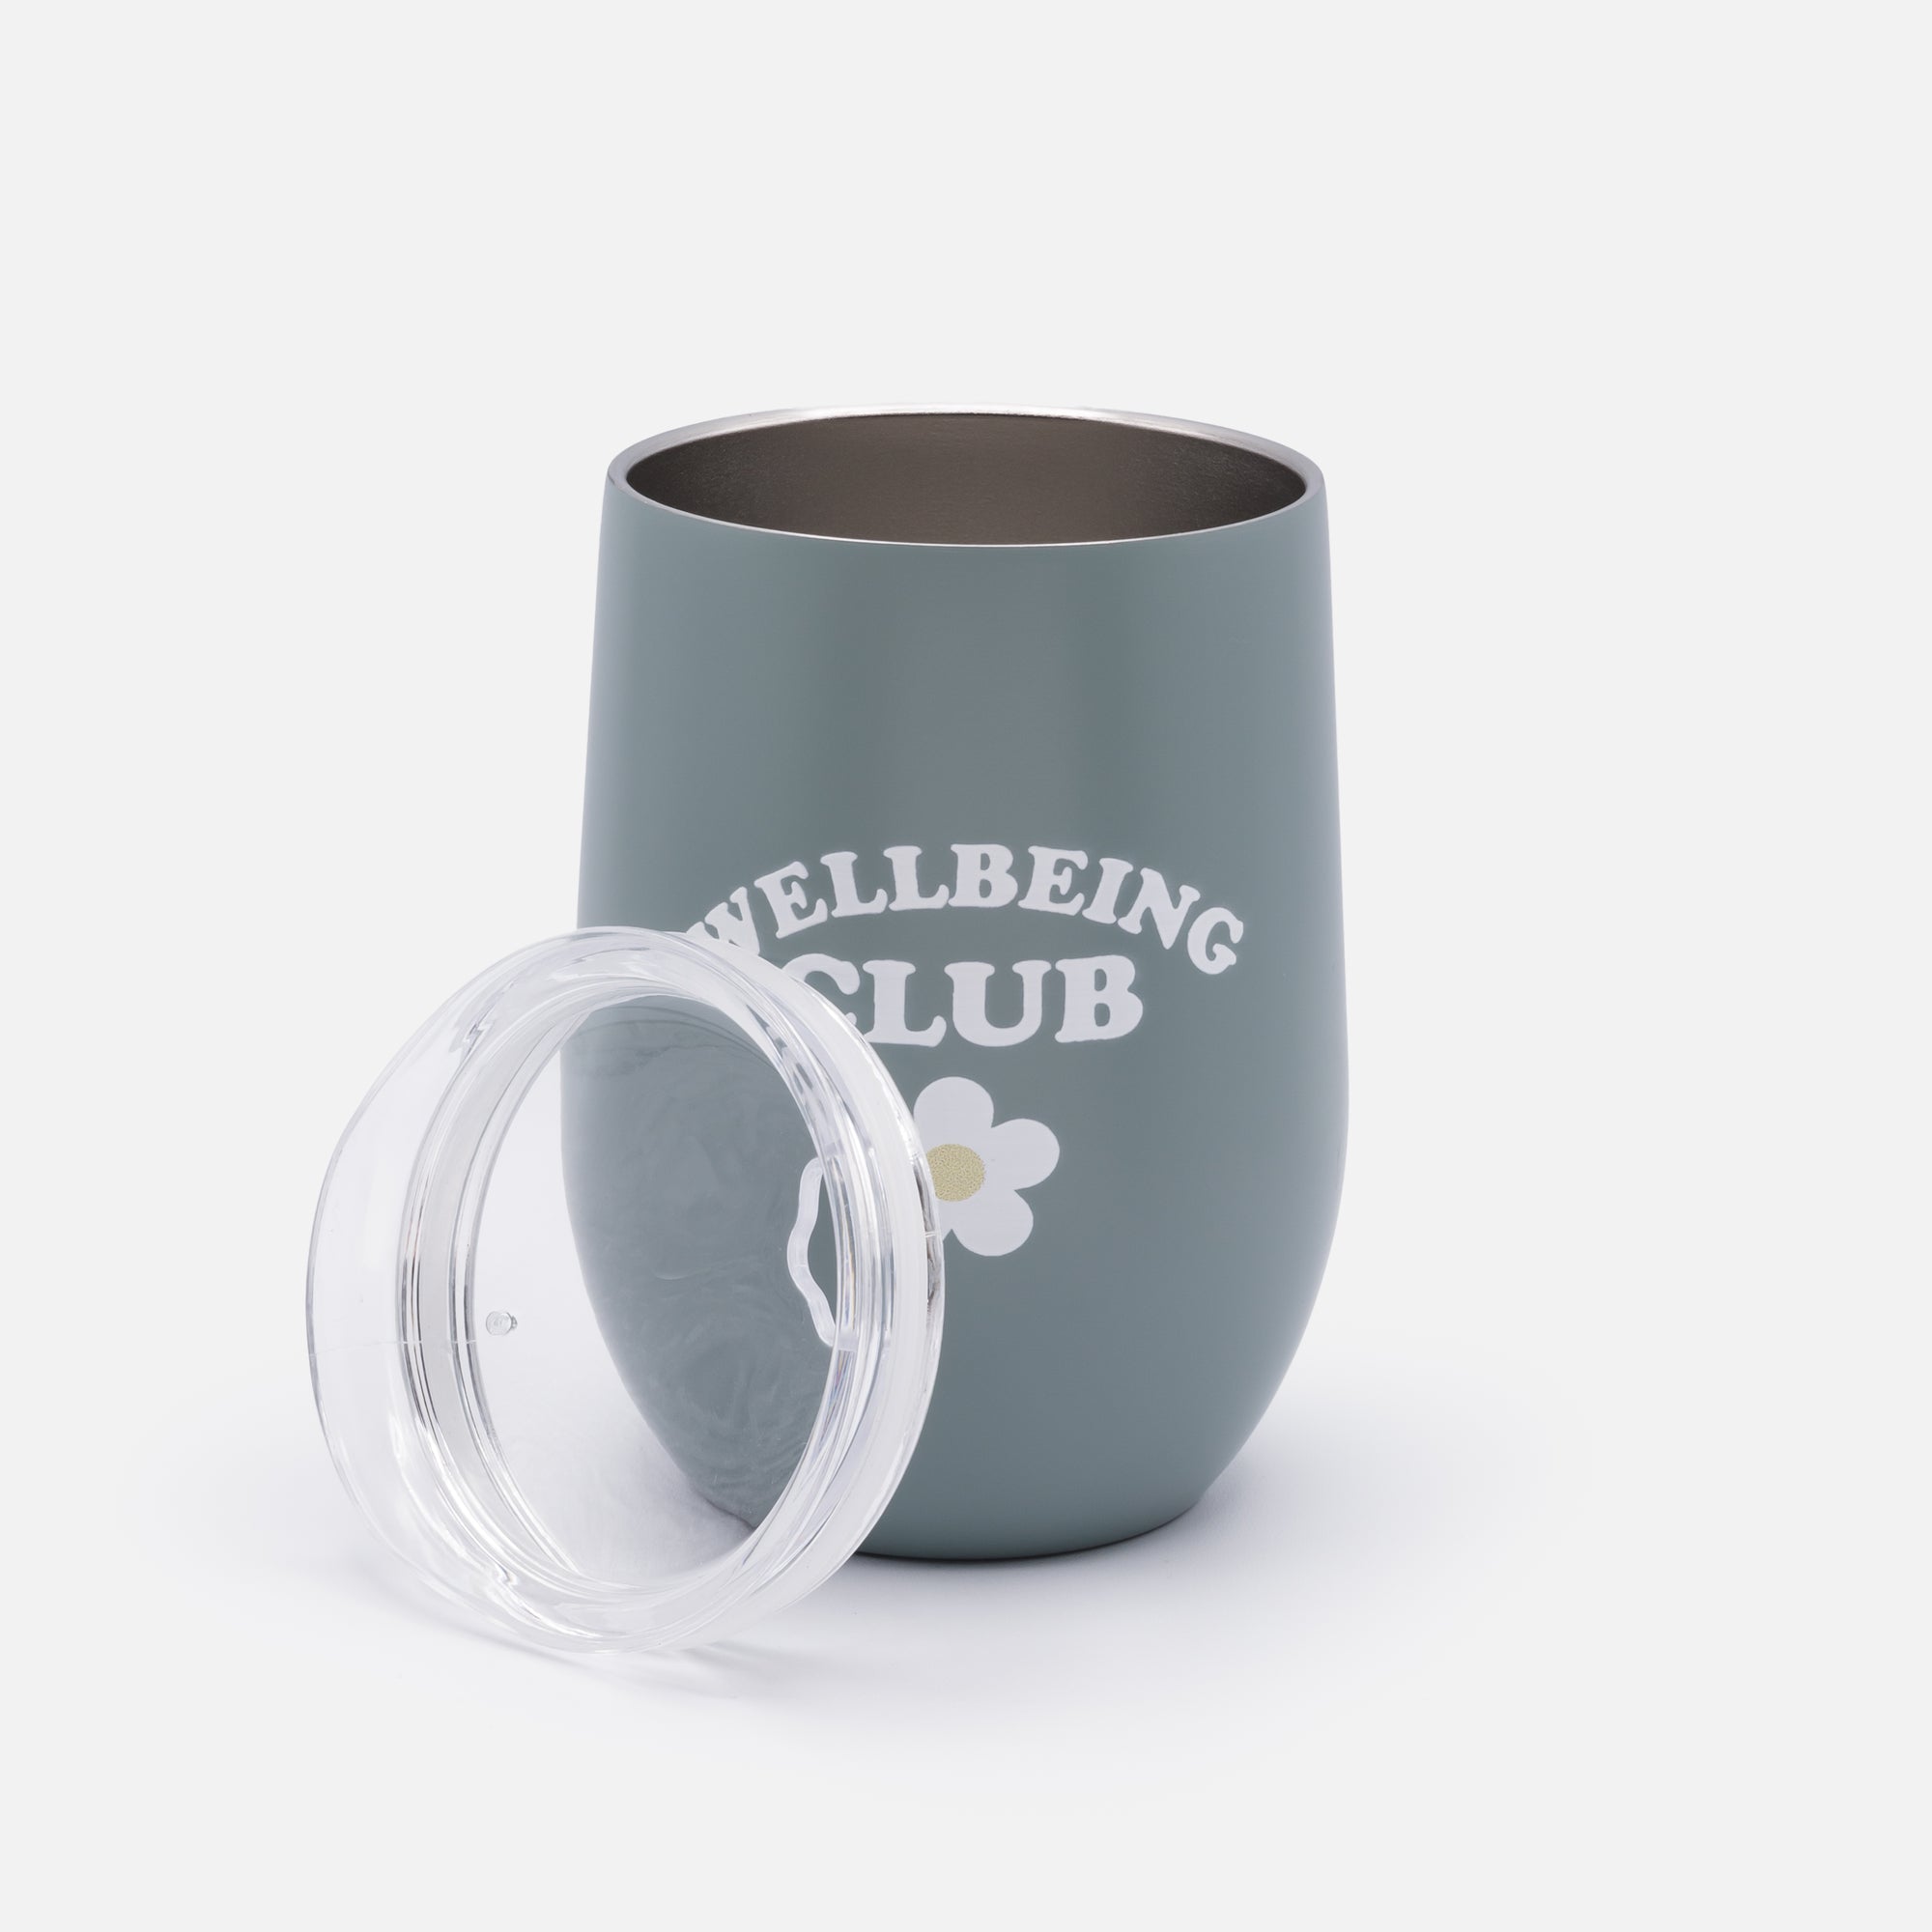 'Wellbeing CLUB' sage green stainless steel travel mug